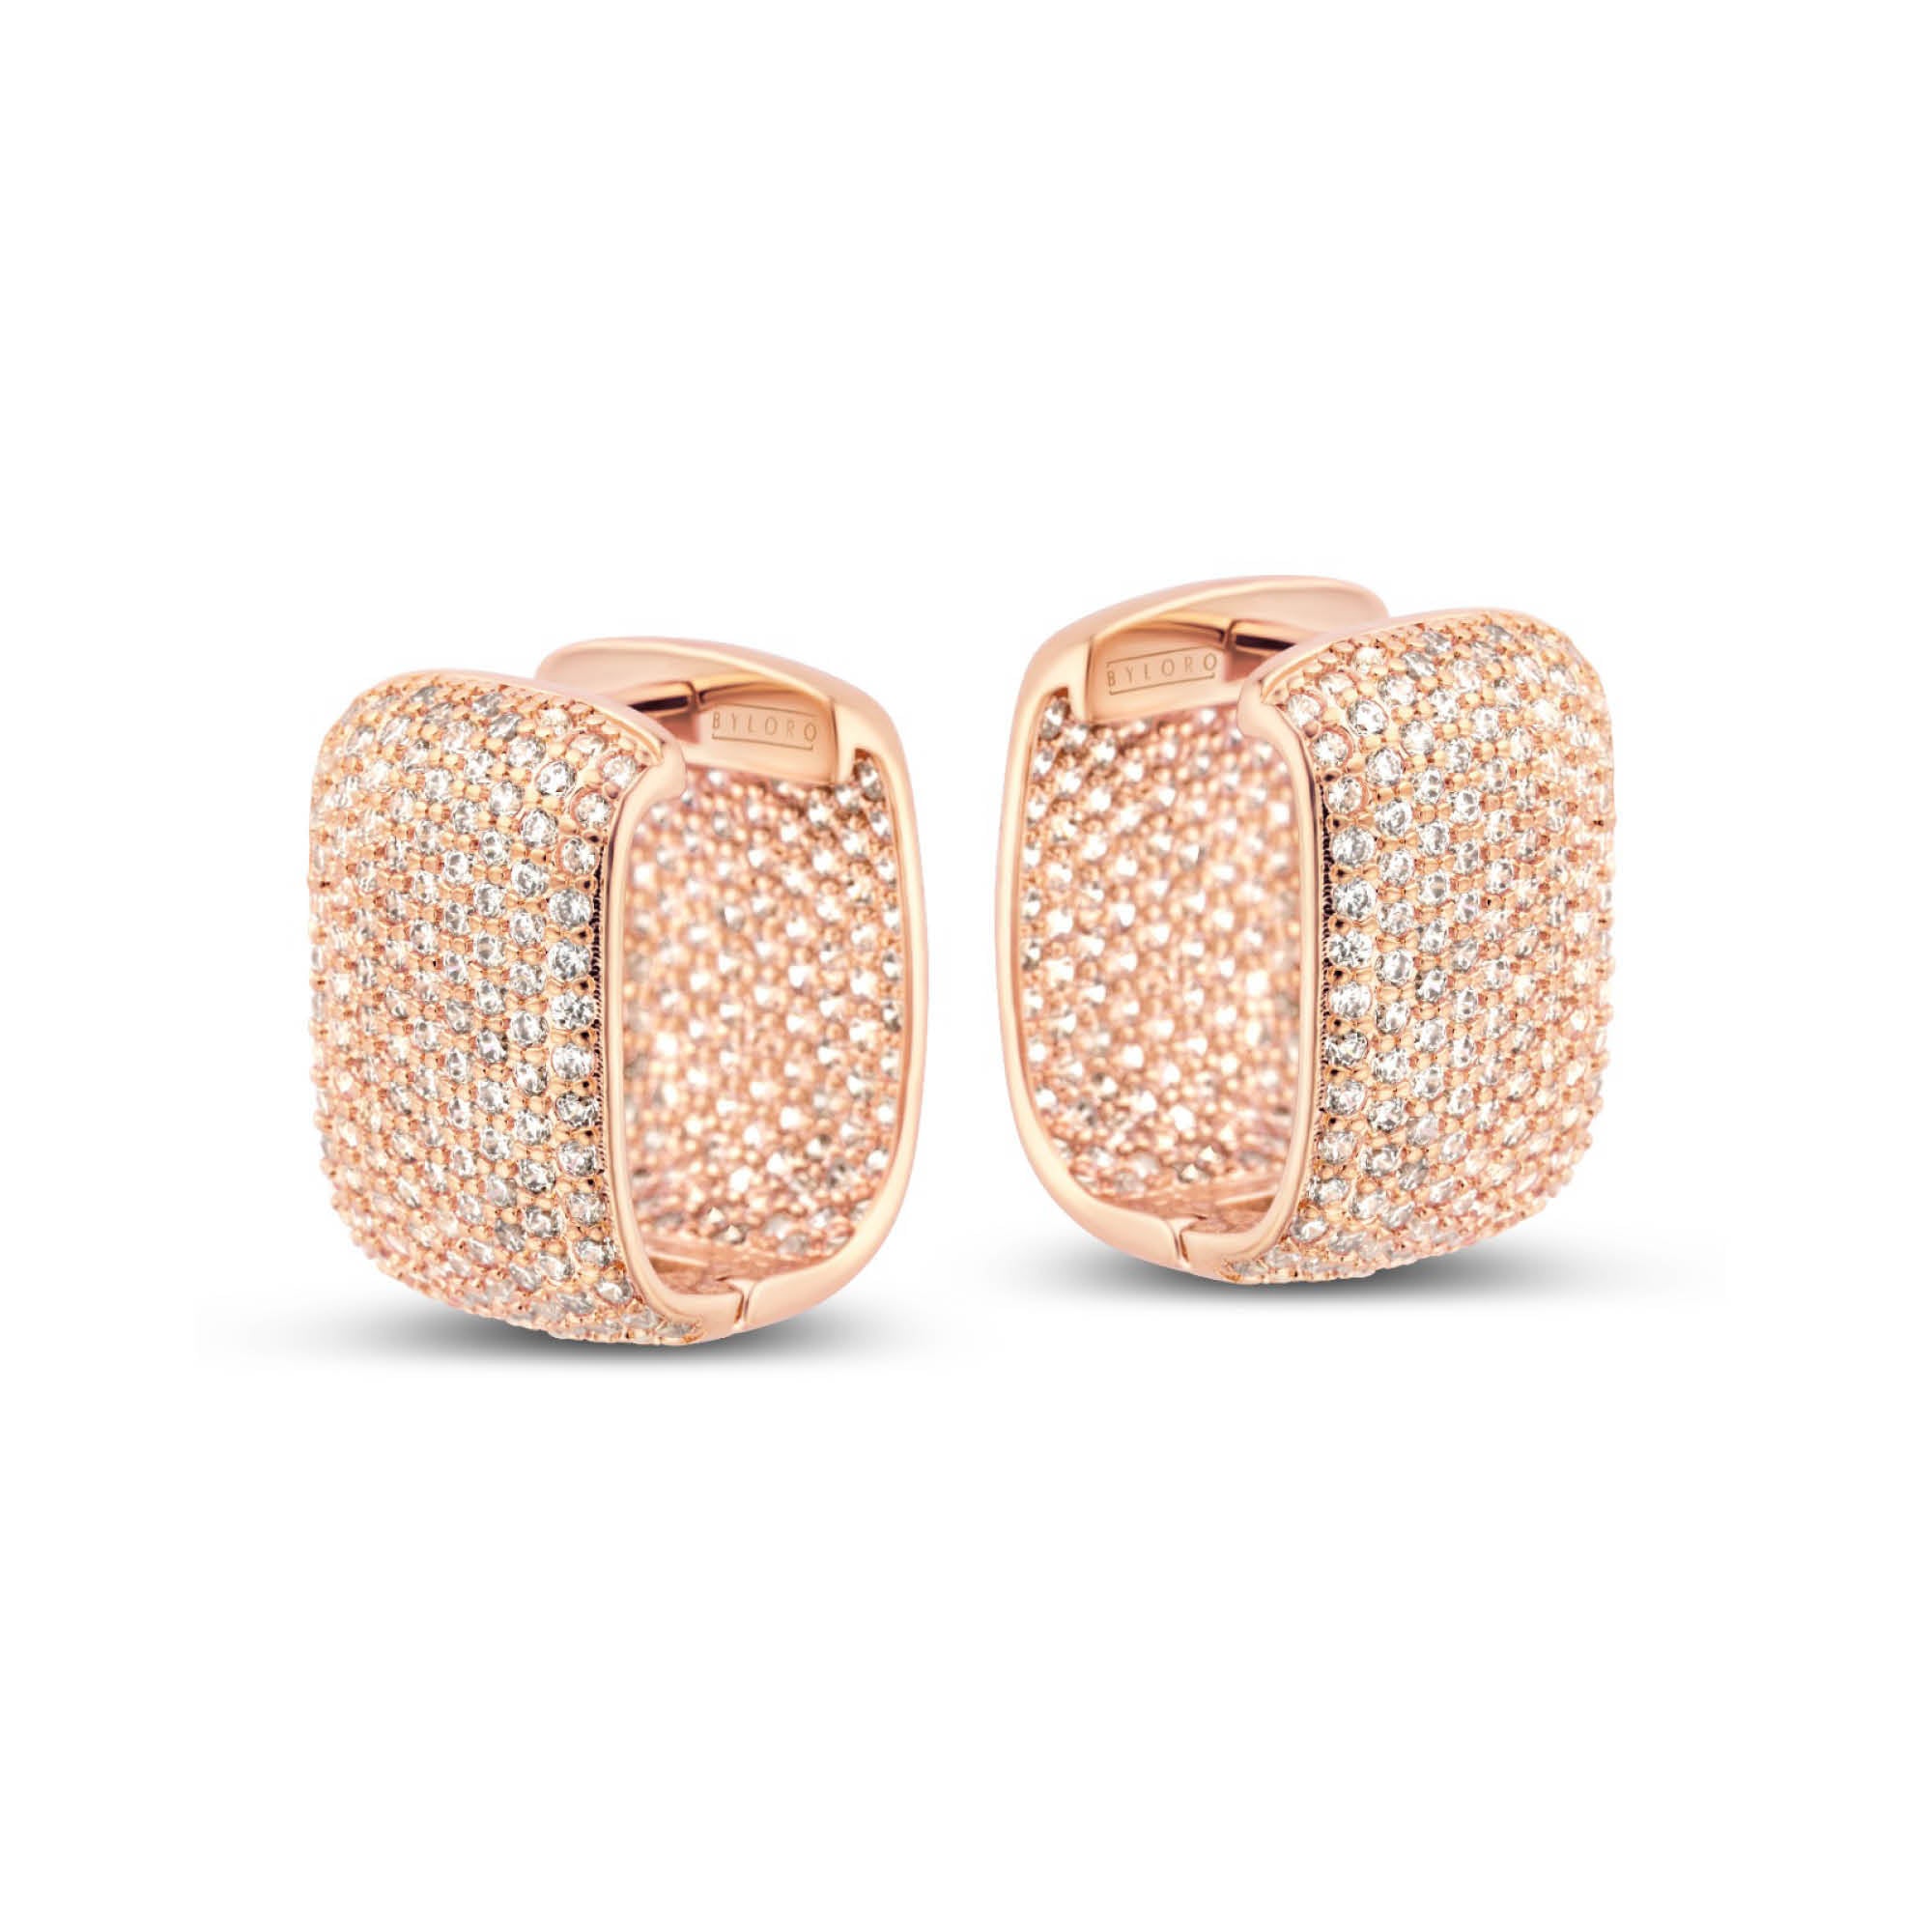 Champagne Tiffany earrings [ROSÉ] ❤ CELEB CHOICE*